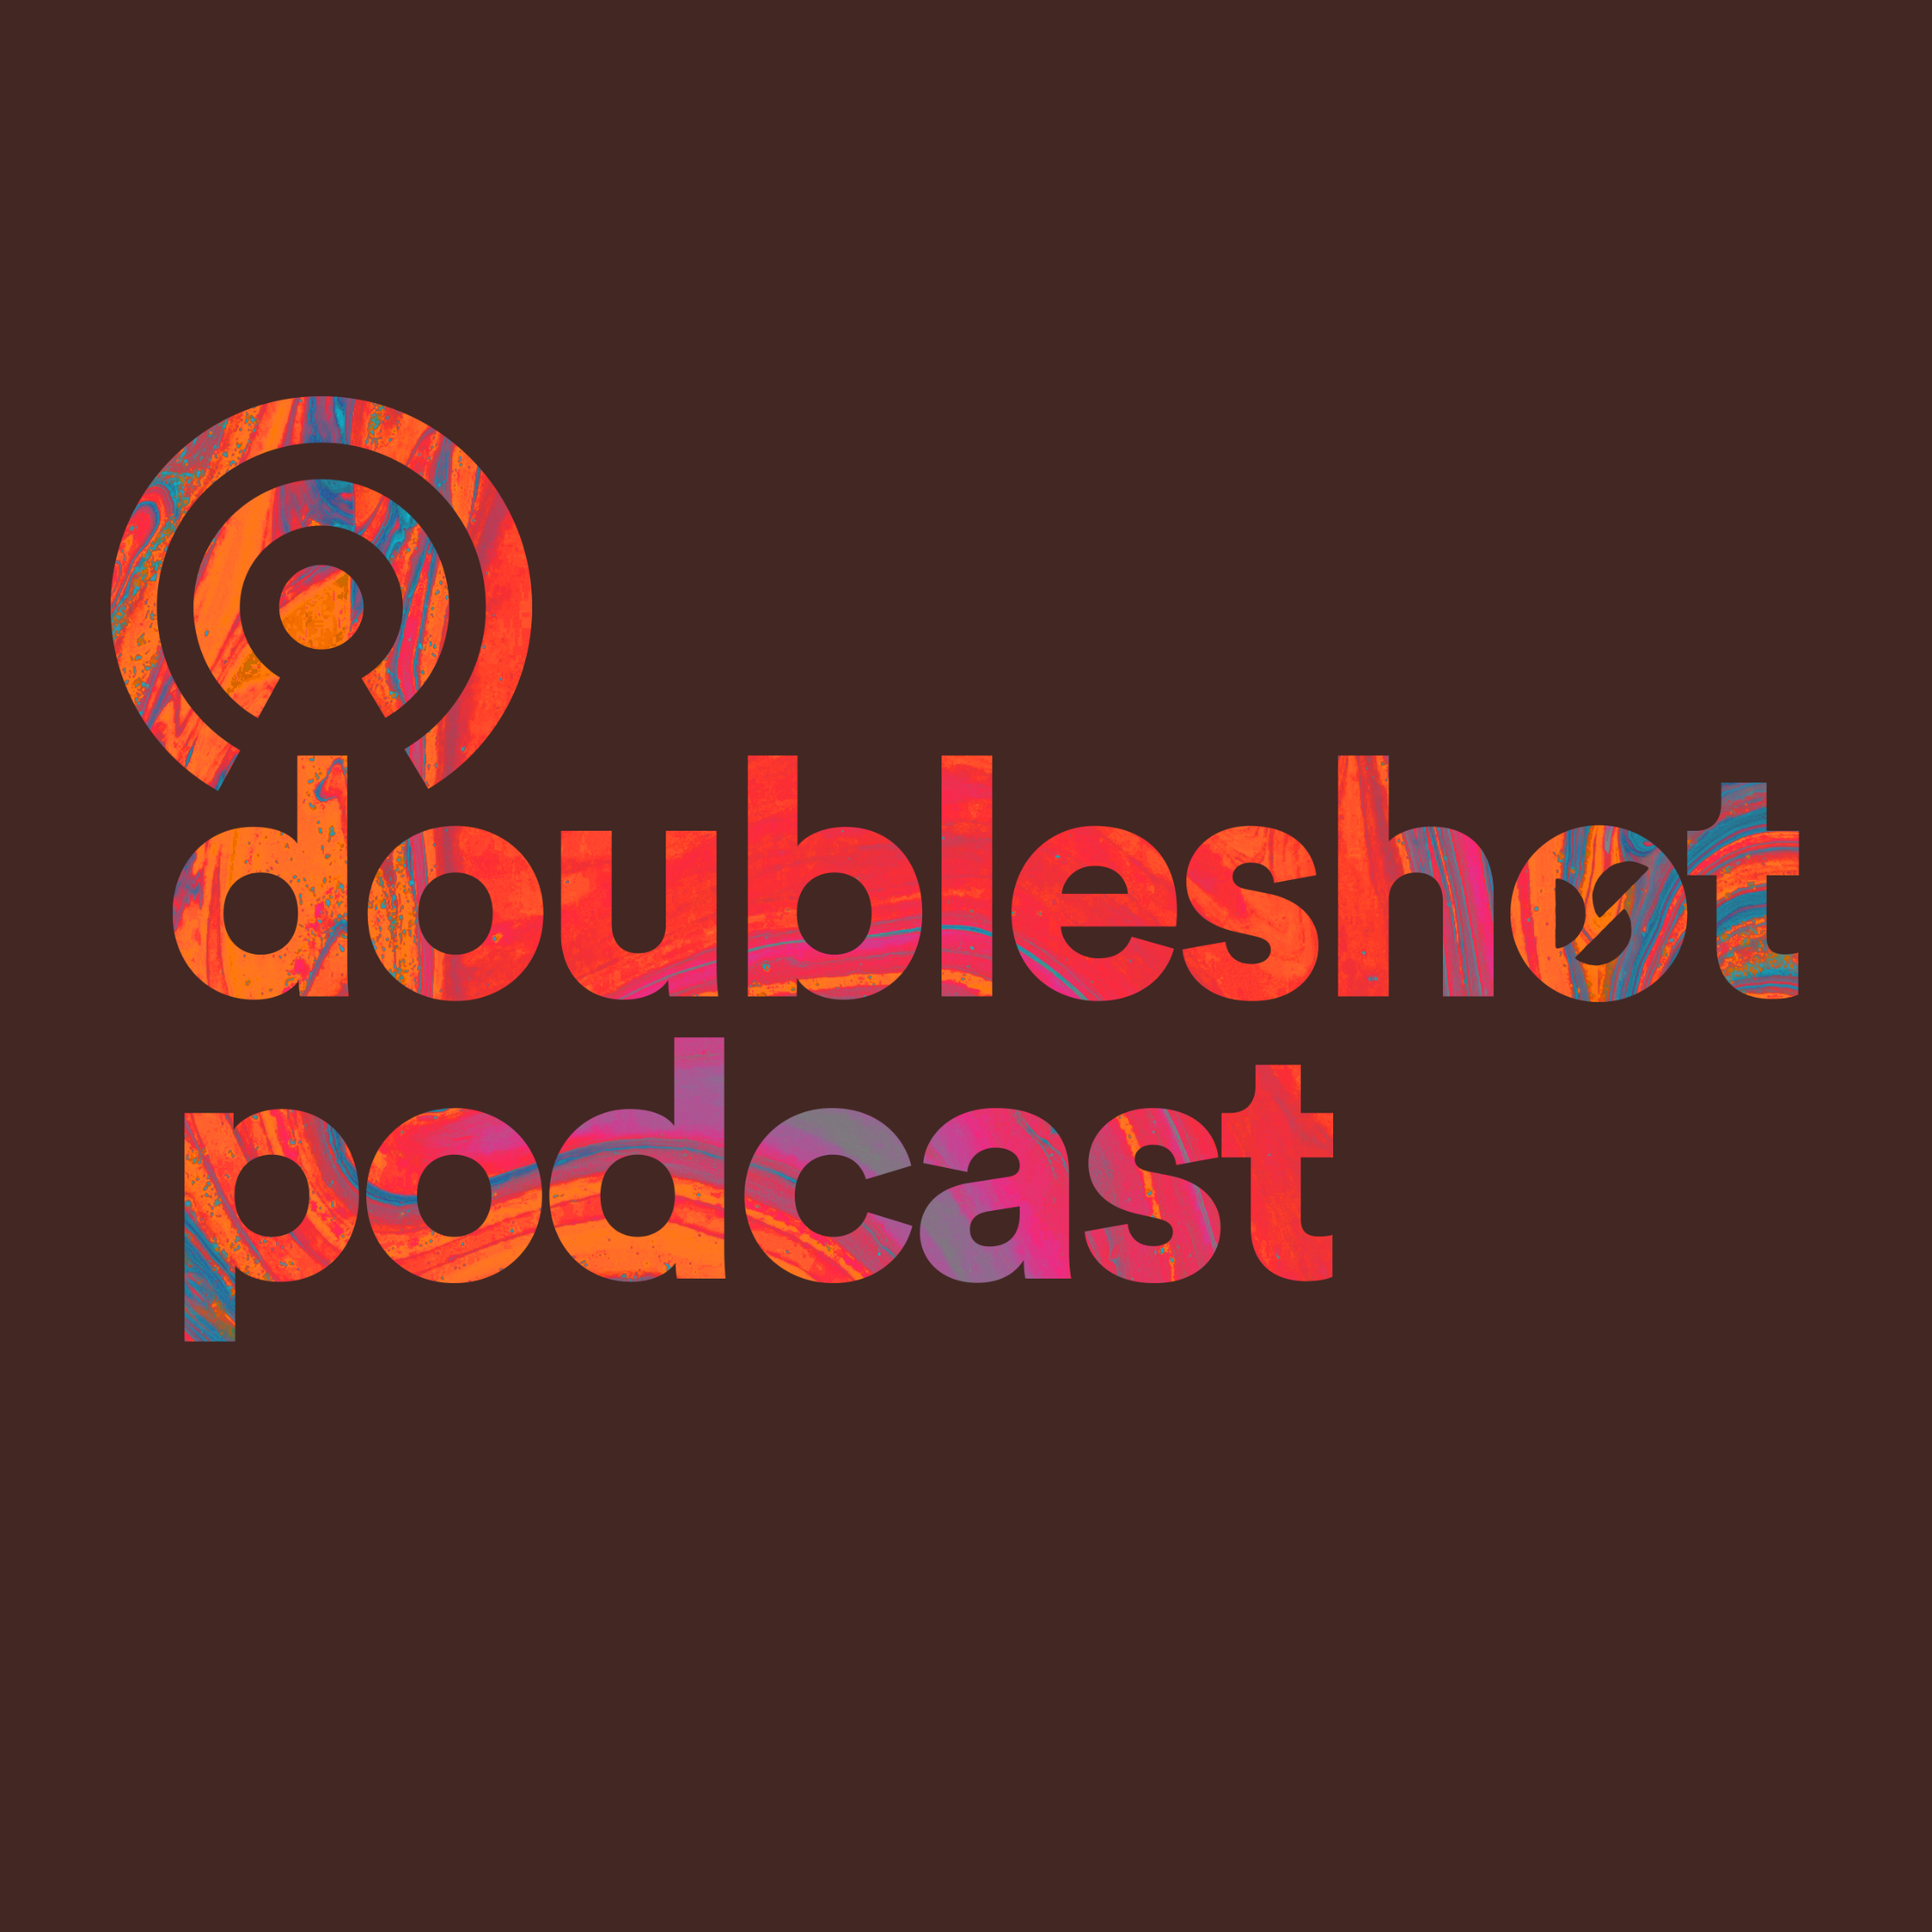 doubleshot coffee podcast